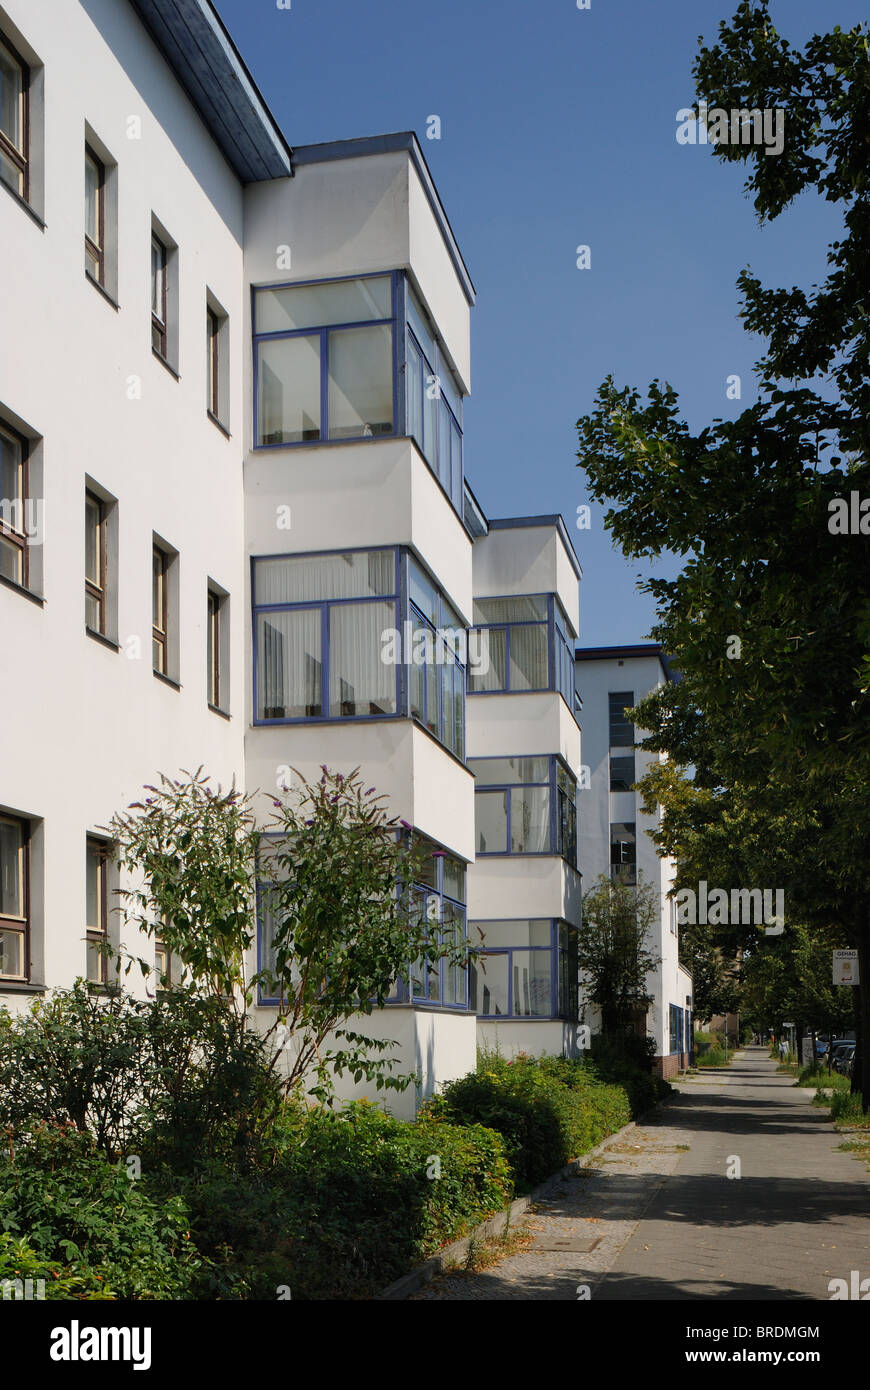 Weisse Stadt, White City, Berlin Modernist Housing Estates, UNESCO World Heritage Site, Reinickendorf, Berlin, Germany, Europe. Stock Photo